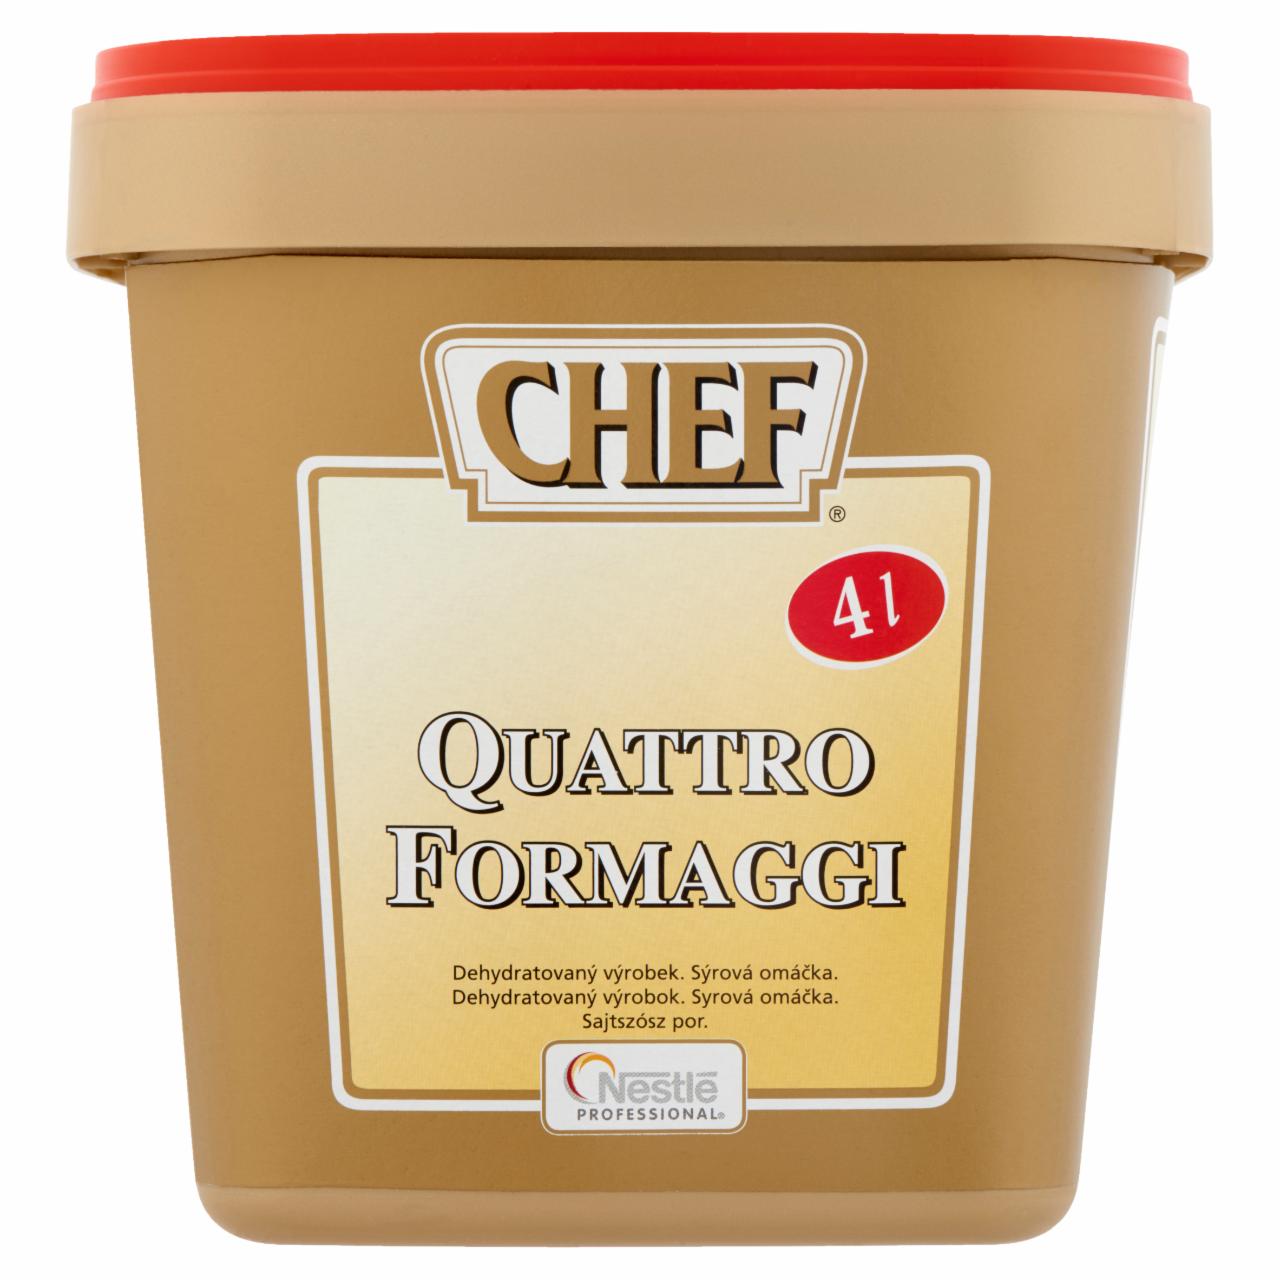 Képek - Chef Quattro Formaggi sajtszósz por 800 g